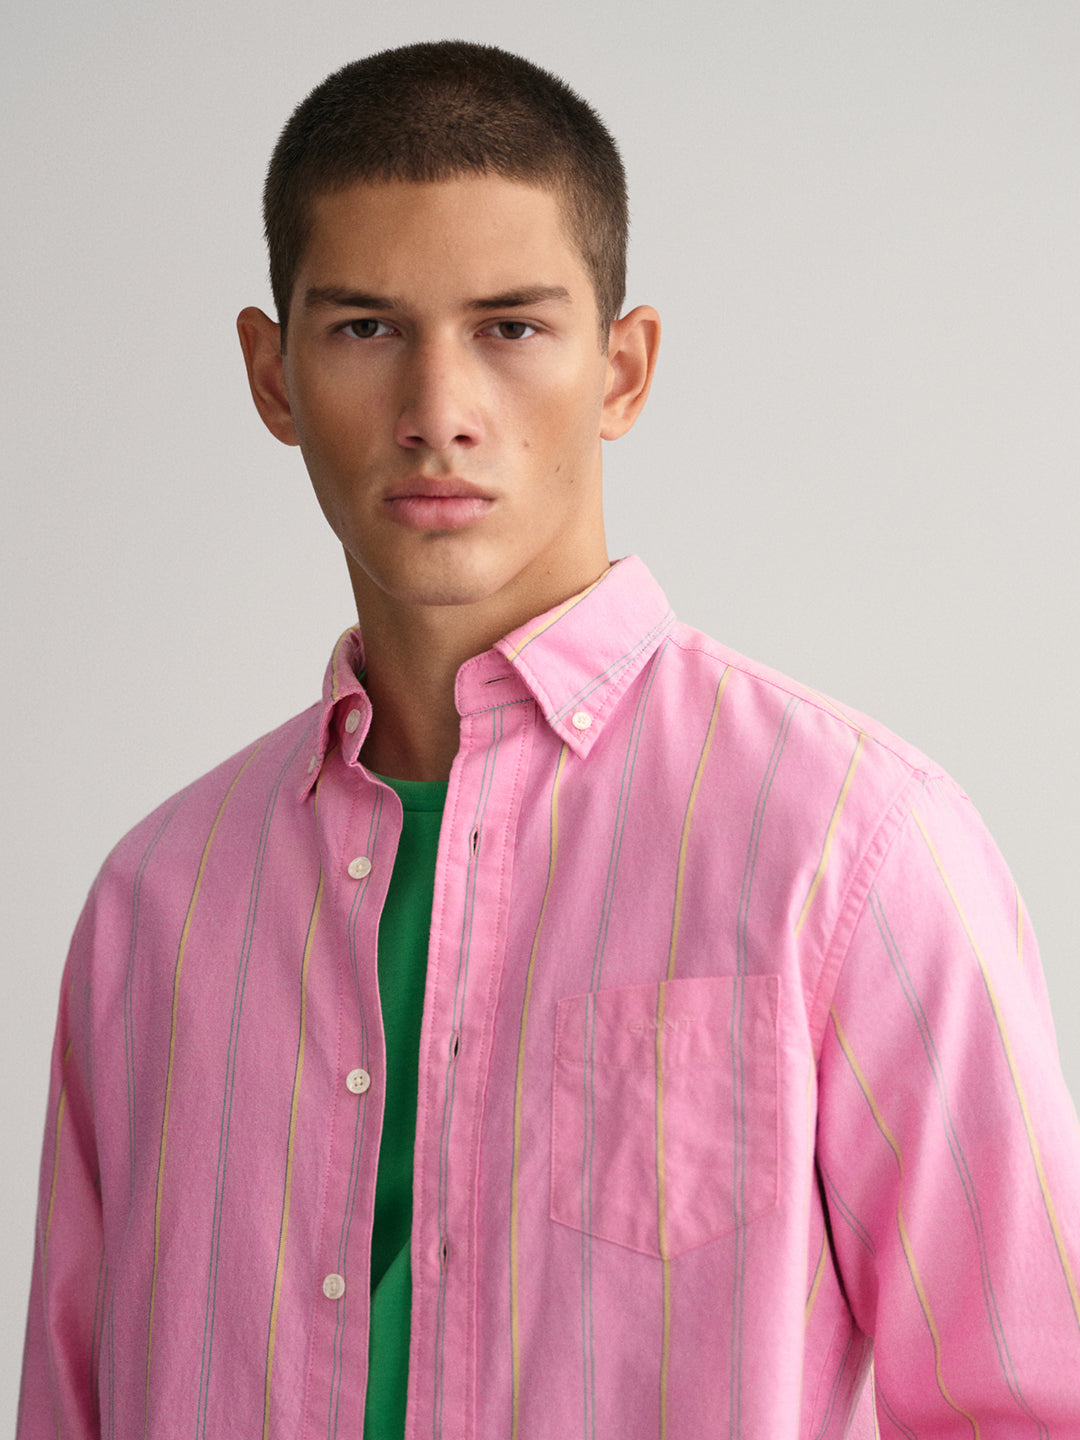 Gant Pink Oxford Striped Regular Fit Shirt